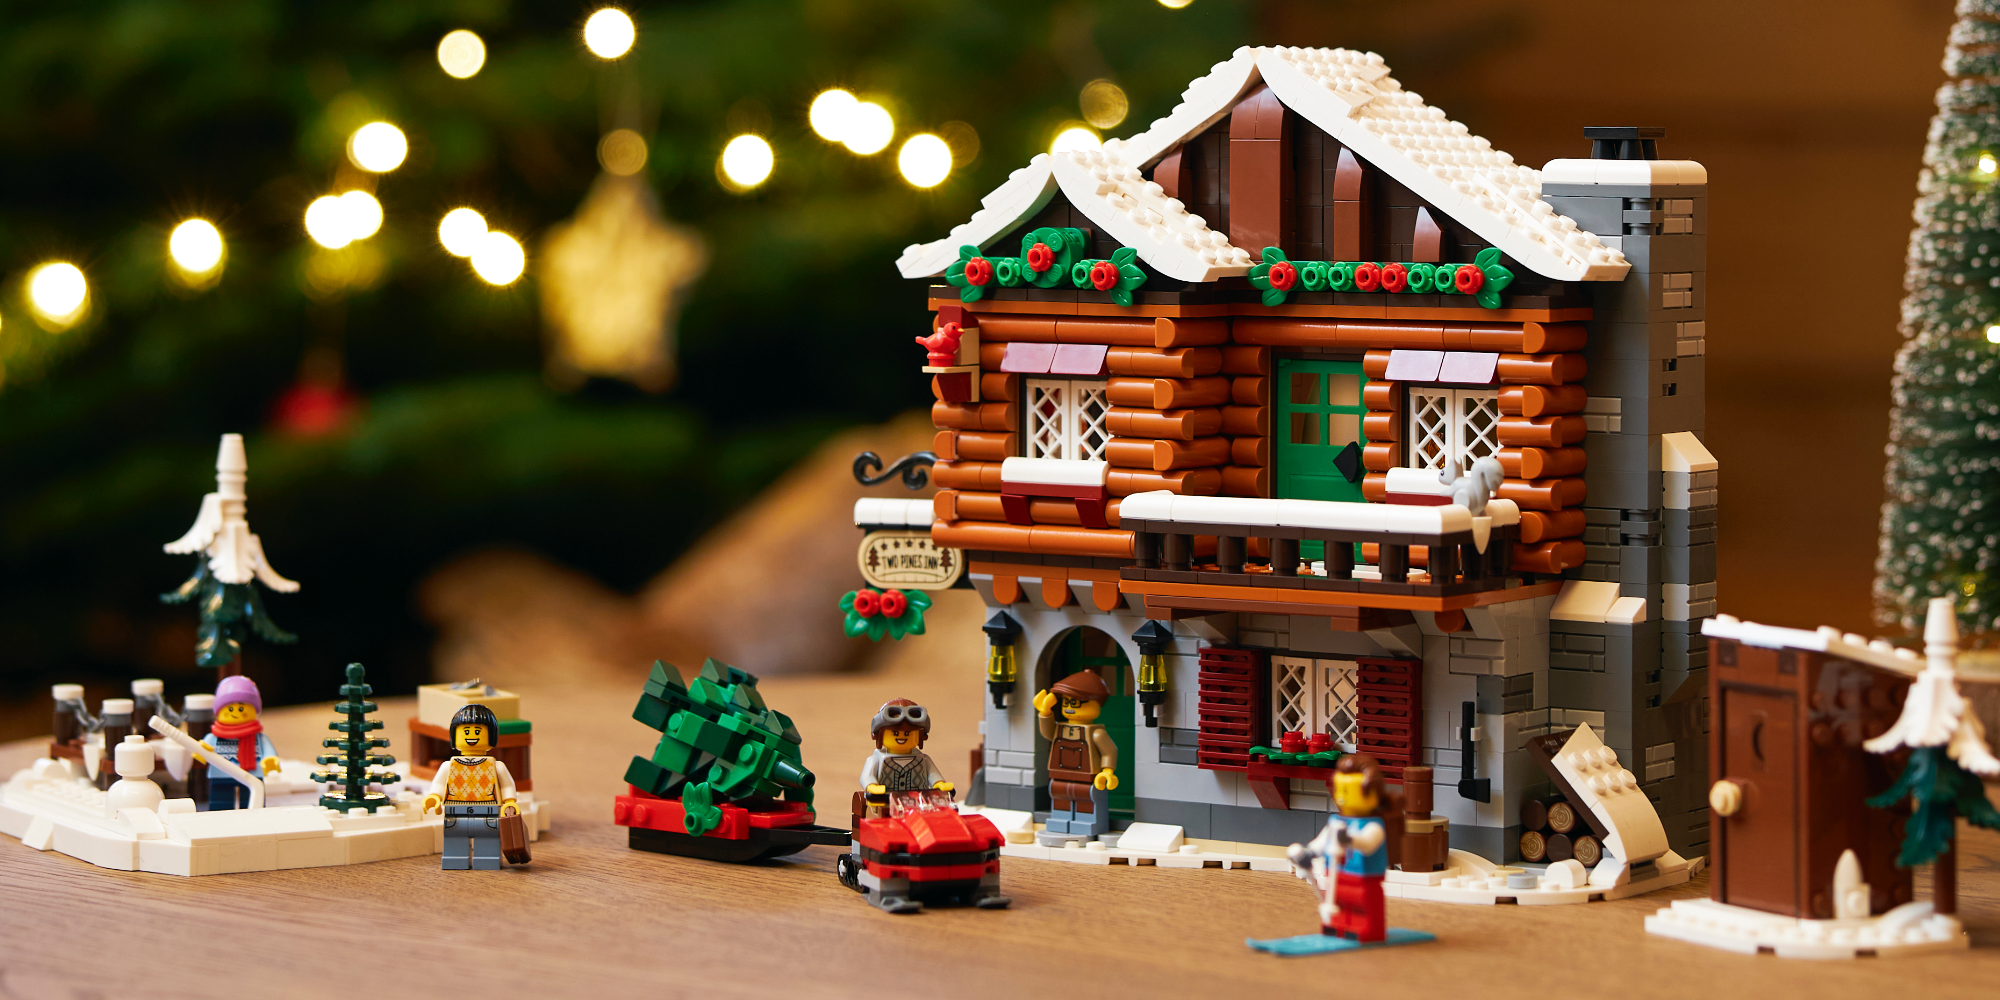 LEGO Christmas tree / pine - green - Extra Extra Bricks